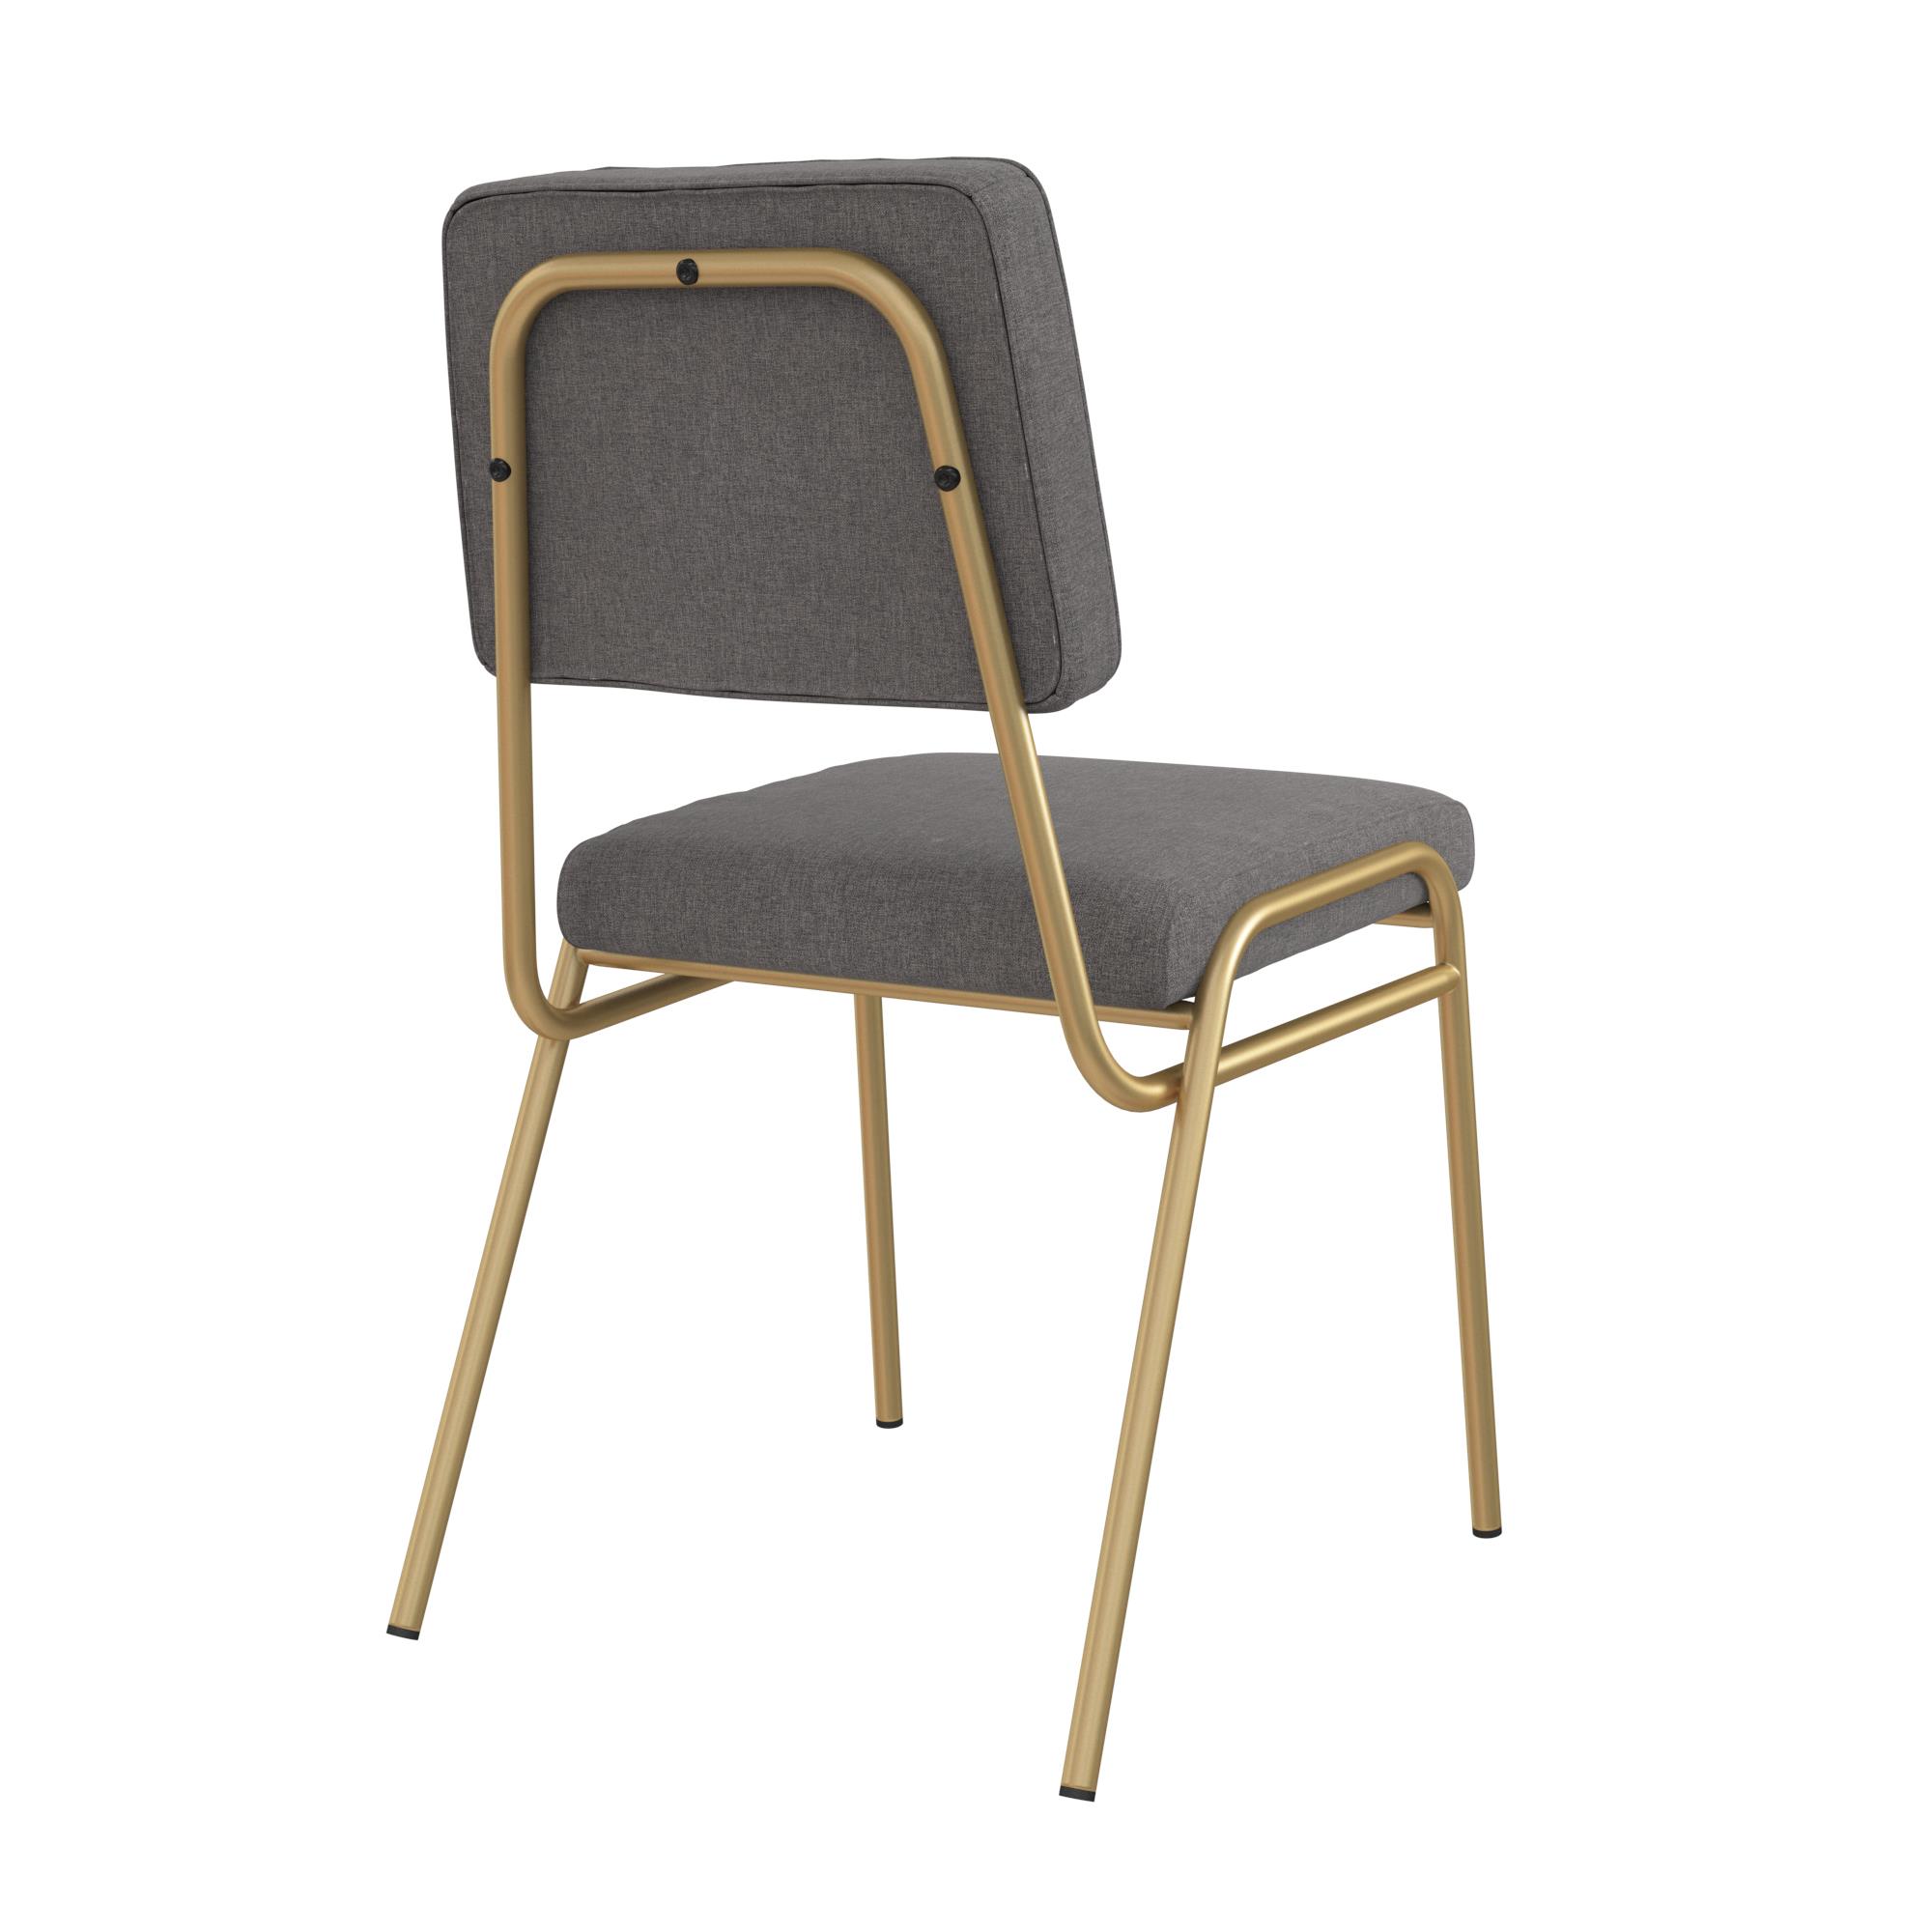 Novogratz Lex Upholstered Dining Chair, Gold Frame & Light Grey Linen Upholstery - image 9 of 14